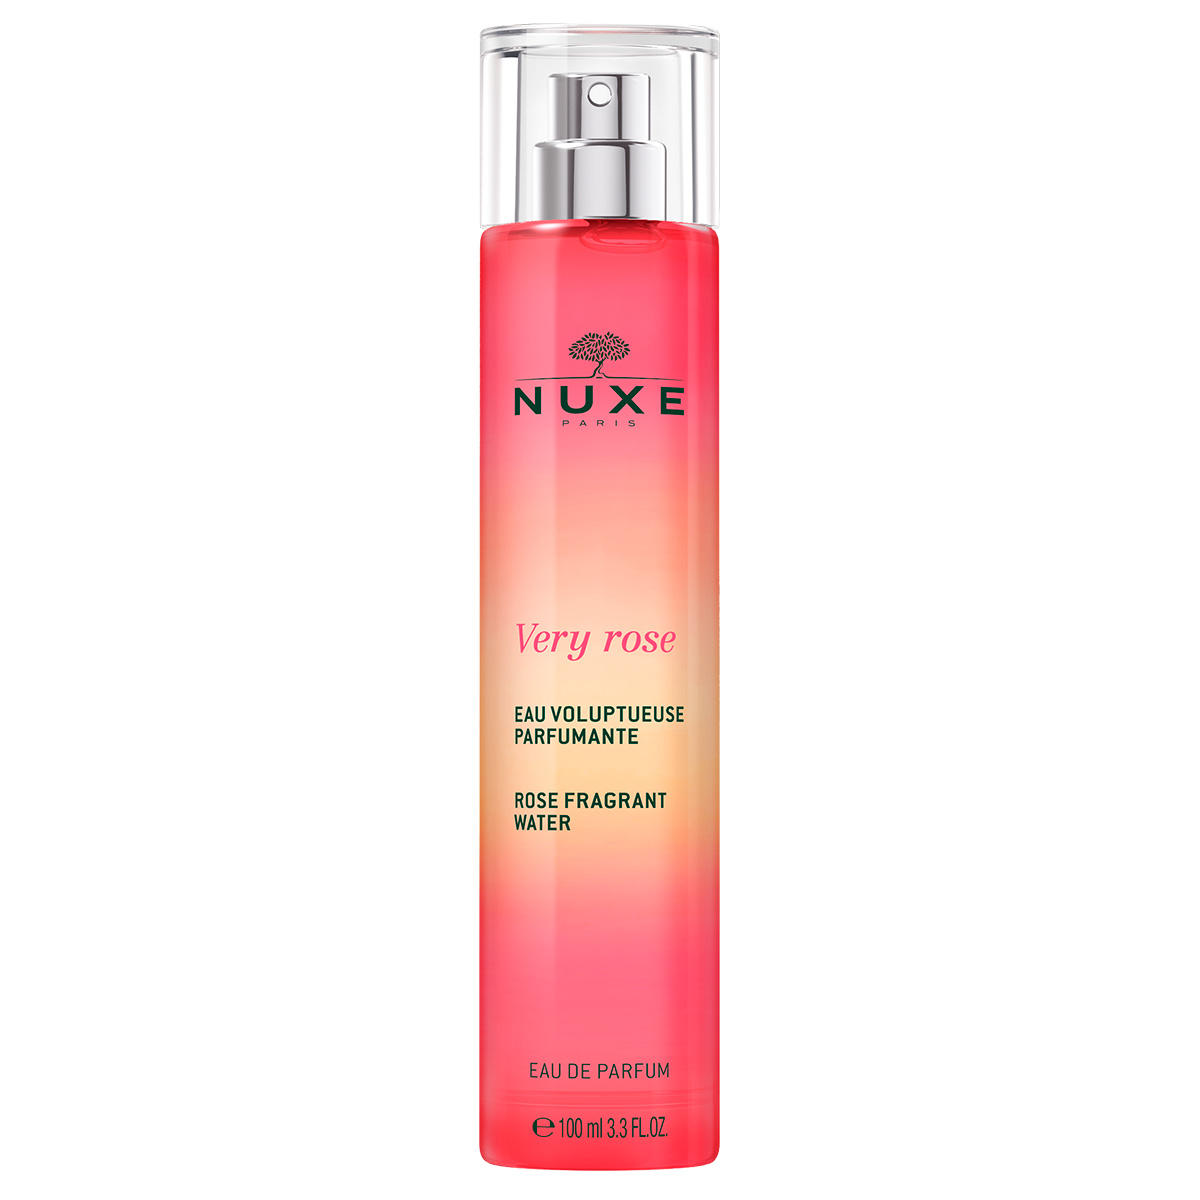 NUXE Very Rose Rose Fragrant Water Eau de Parfum 100 ml - 1